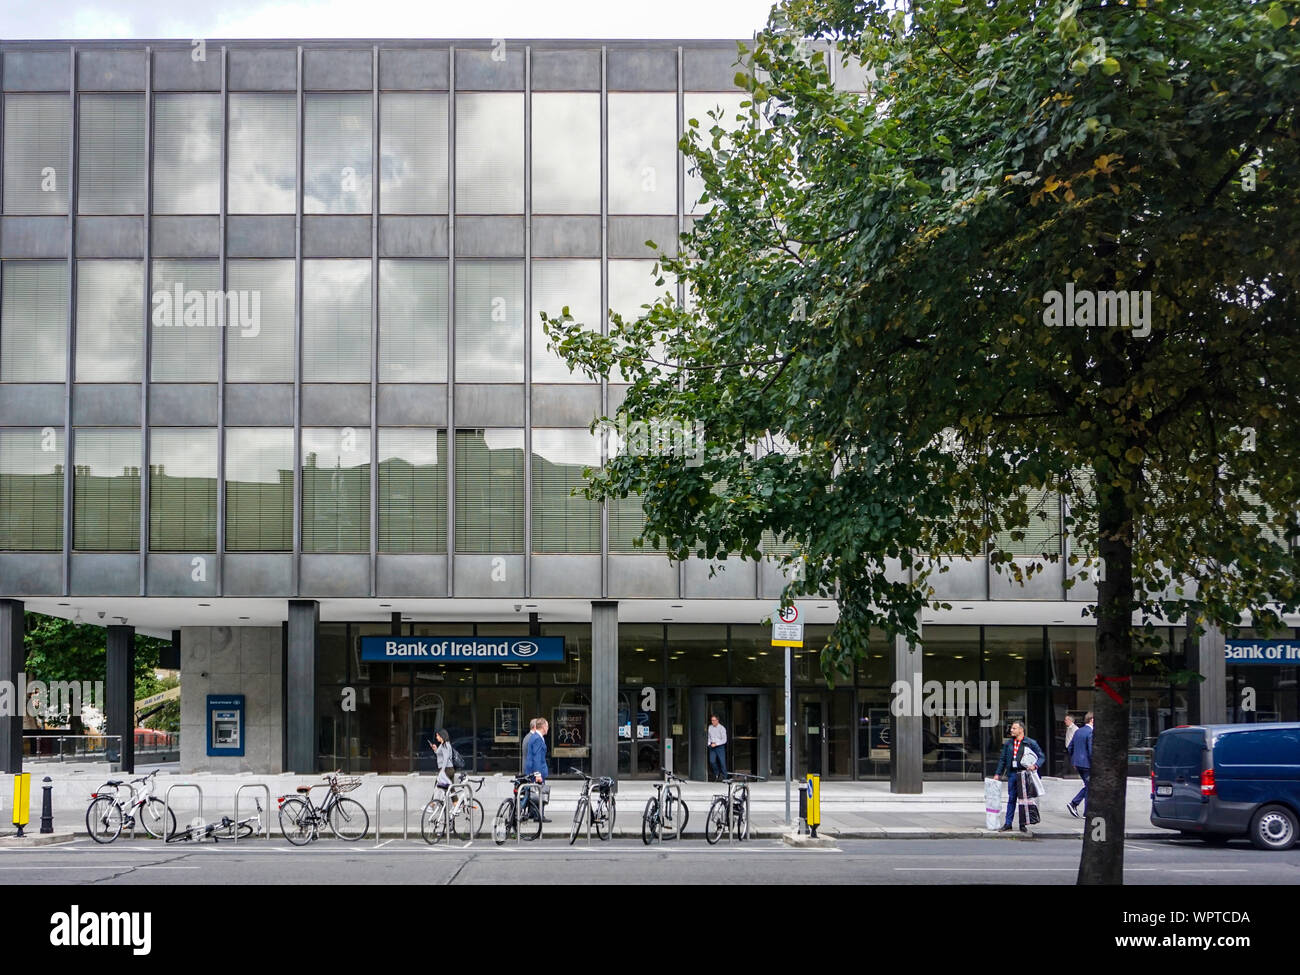 Bank of Ireland office in Lower Baggot Street. Bank of Ireland is one of Ireland's main banks.. Stock Photo